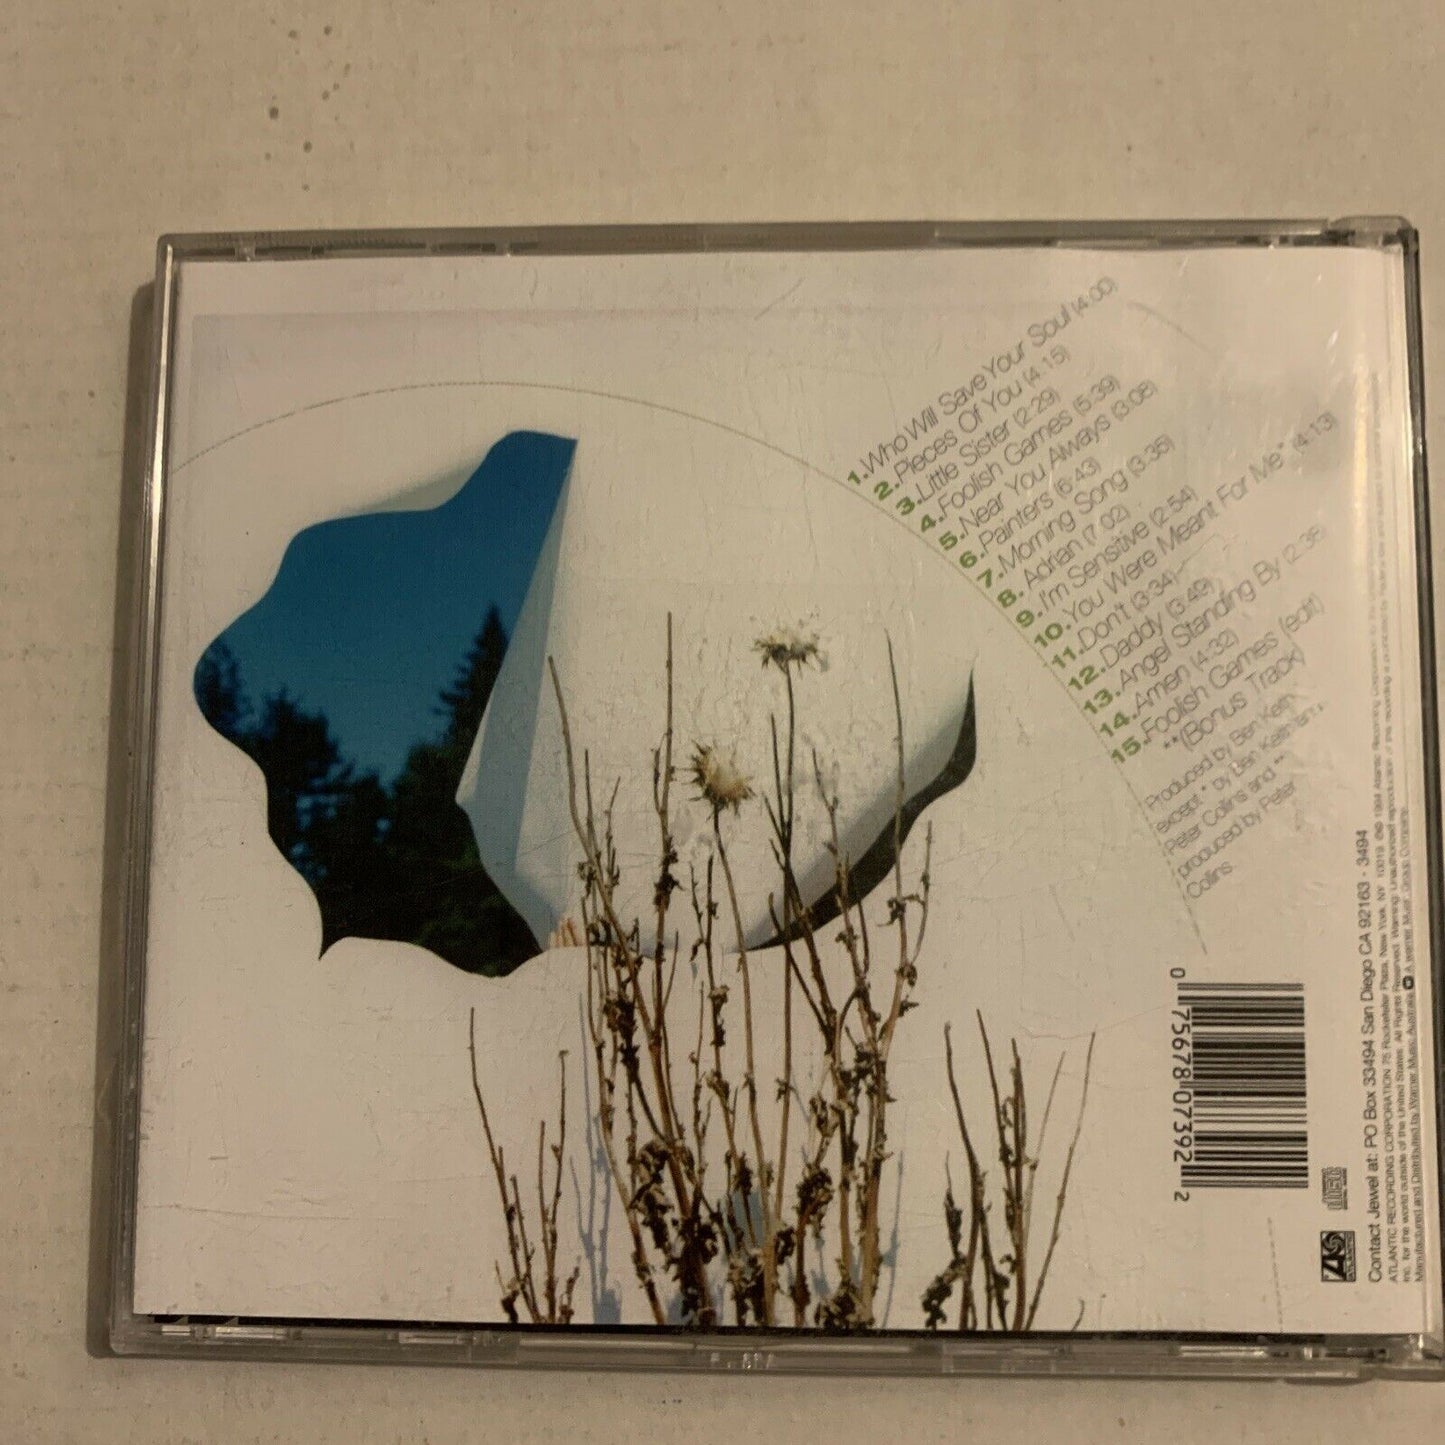 Jewel - Pieces of You (CD, 1994)